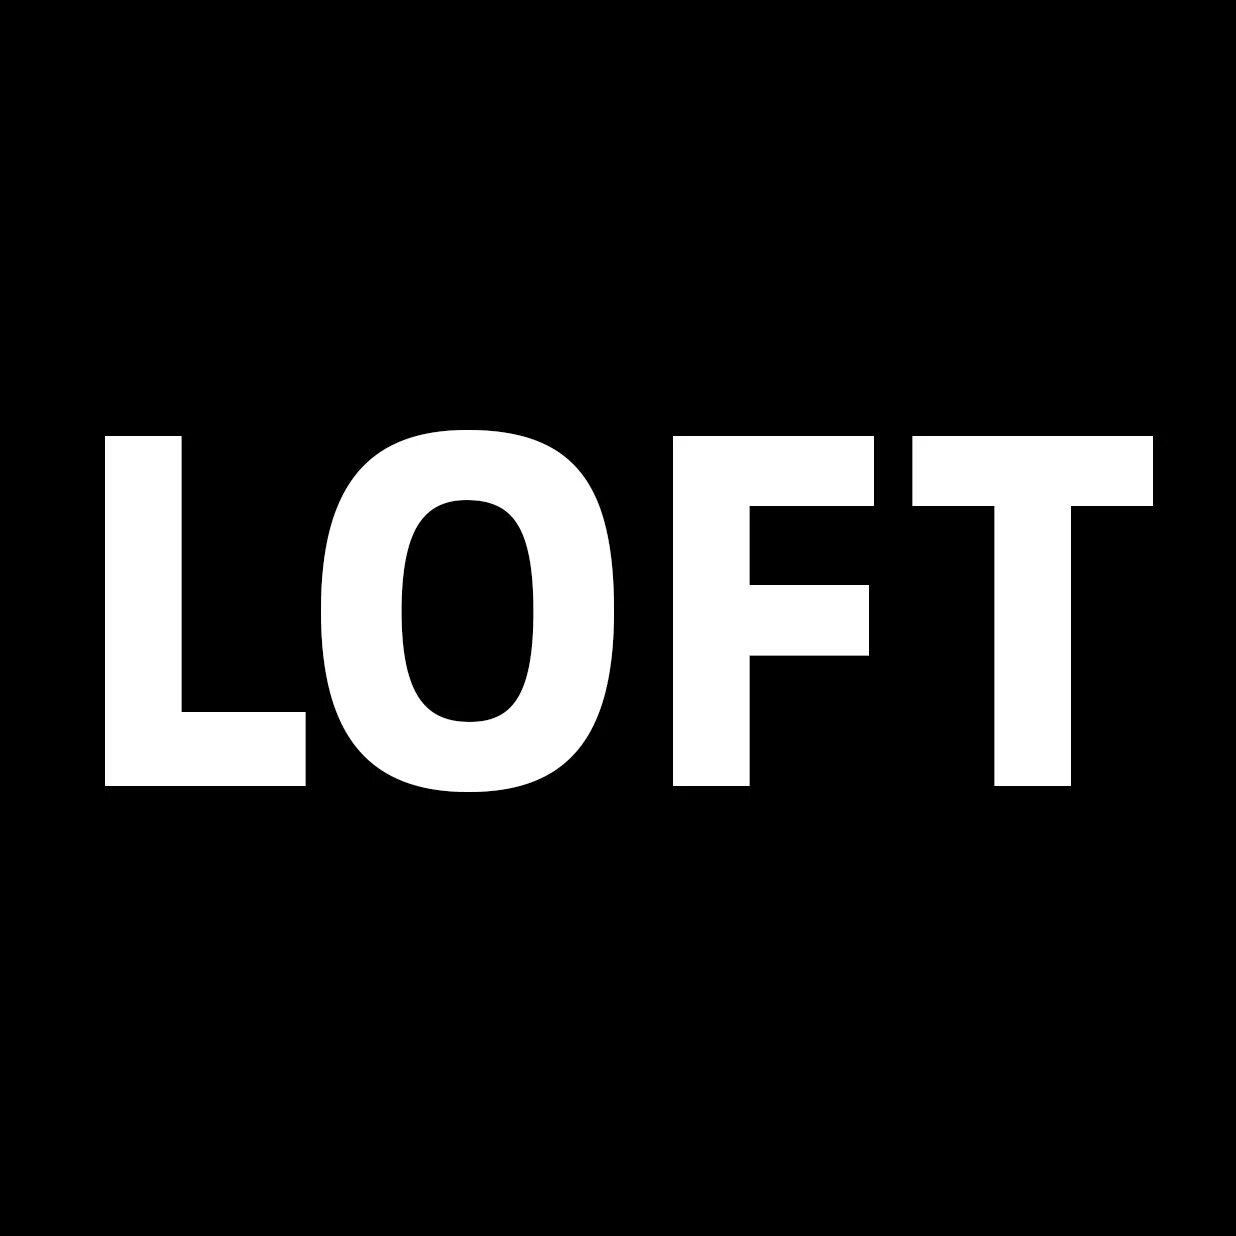 Hayloft текст. Loft логотип. Loft надпись. Надписи на мебели лофт. Логотип лофт мебель.